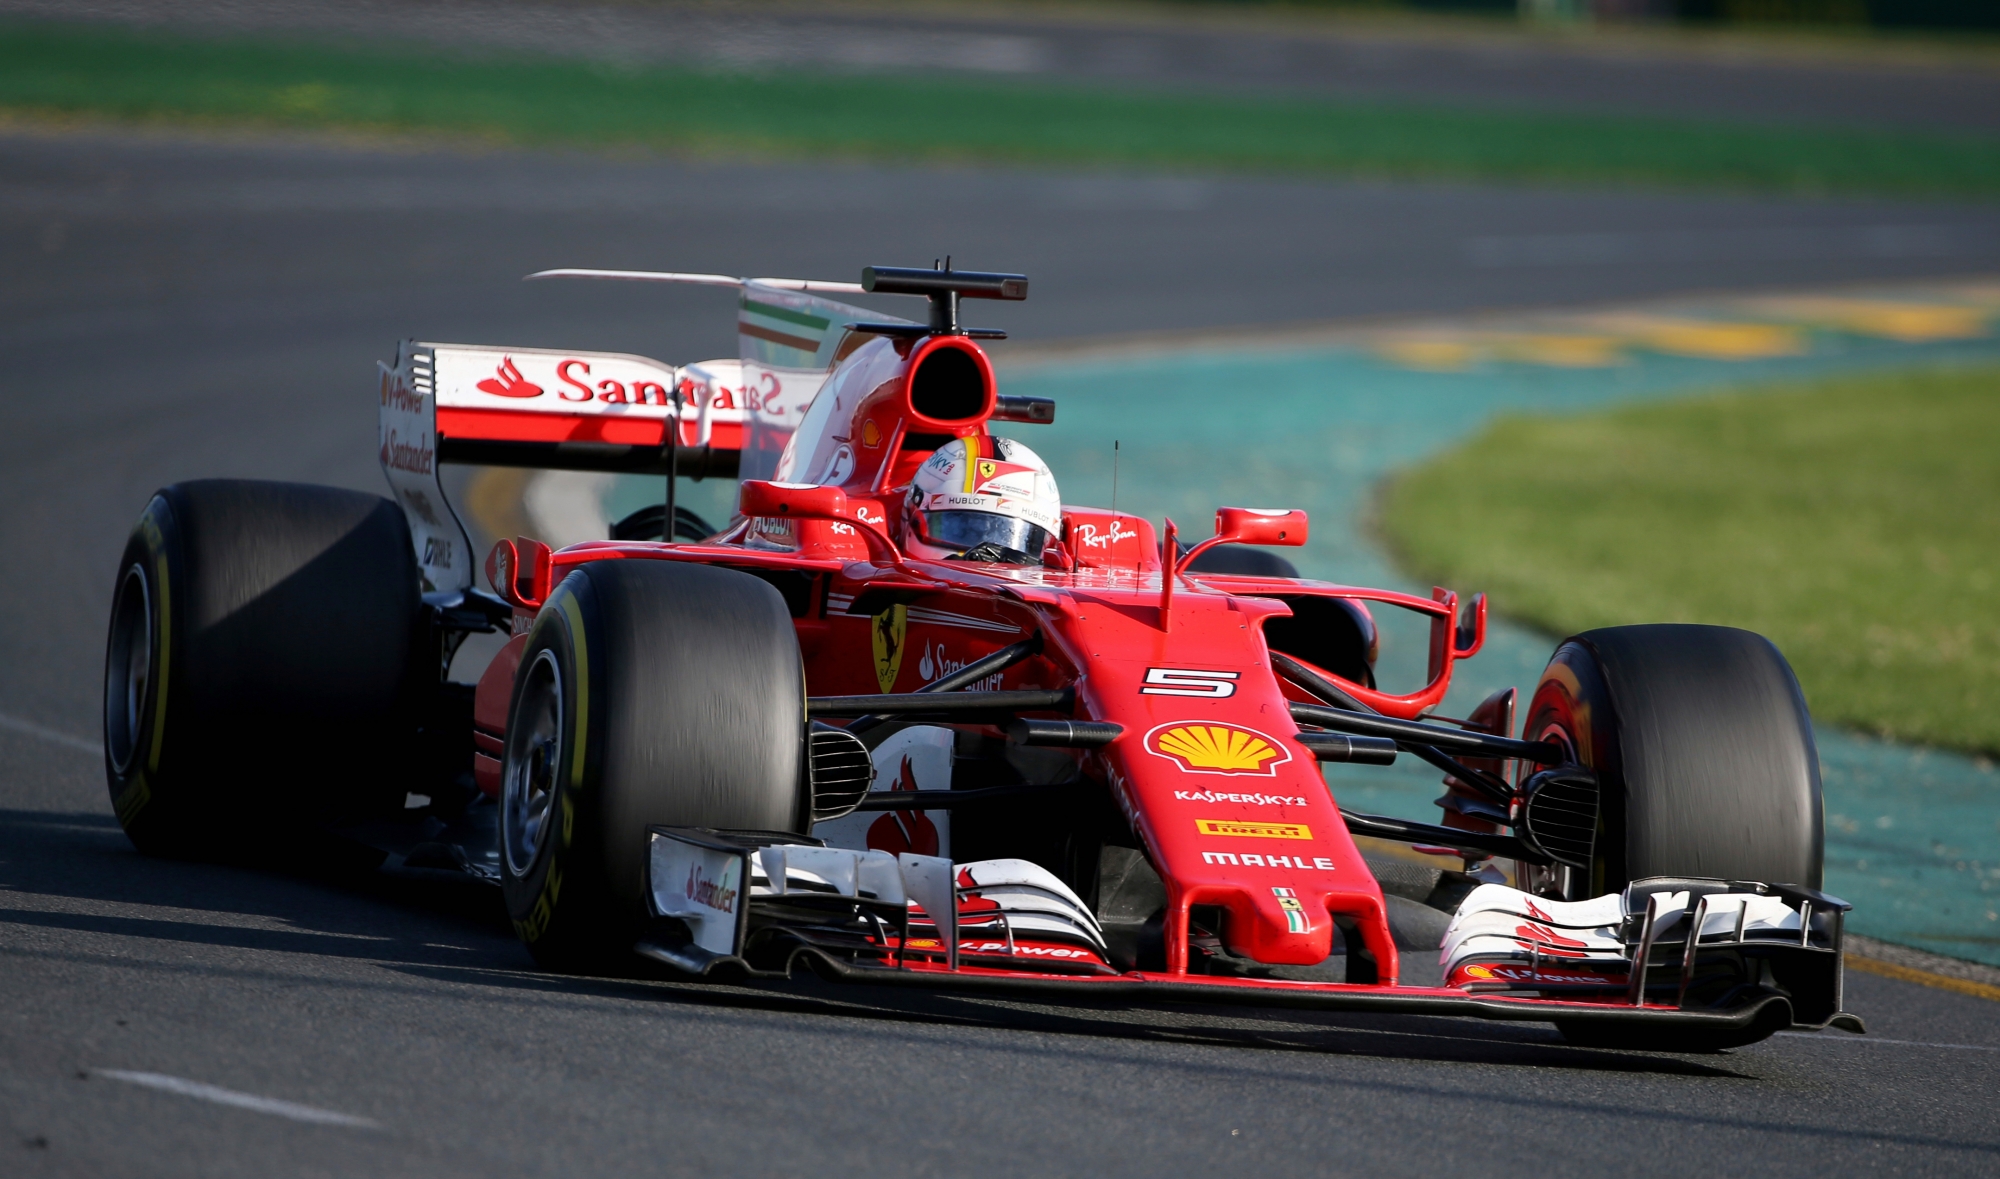 Ferrari driver Sebastian Vettel of Germany steers his car during the Australian Formula One Grand Prix in Melbourne, Australia, Sunday, March 26, 2017. (AP Photo/Rick Rycroft) Australia F1 GP Auto Racing